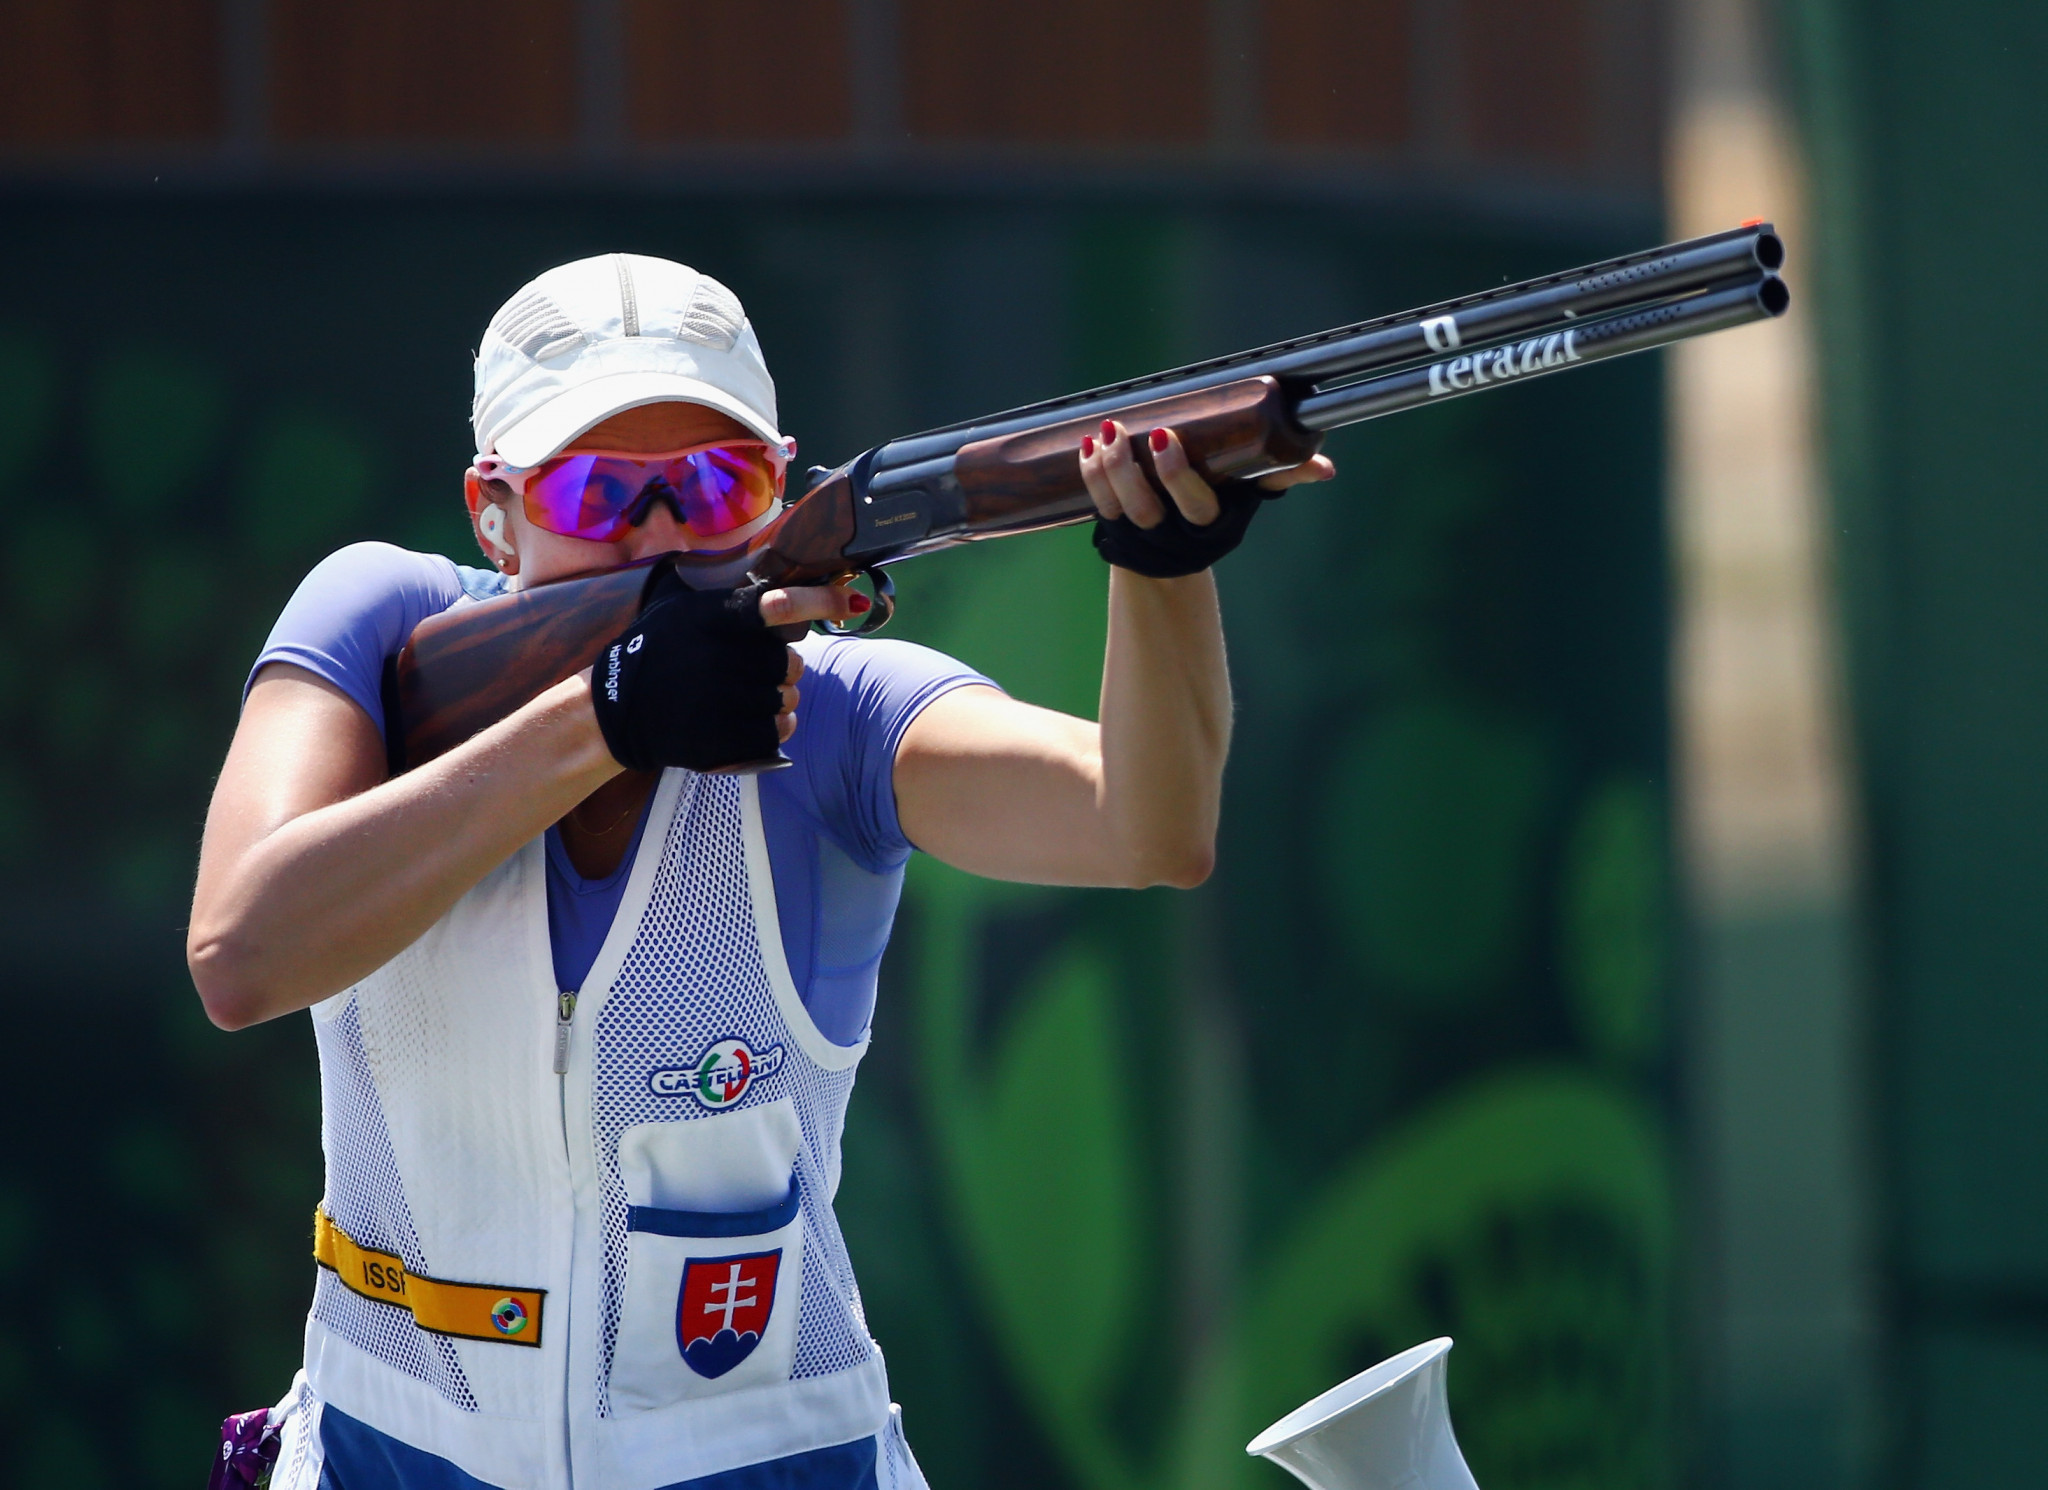 Barteková claims women's skeet crown at European Championship Shotgun